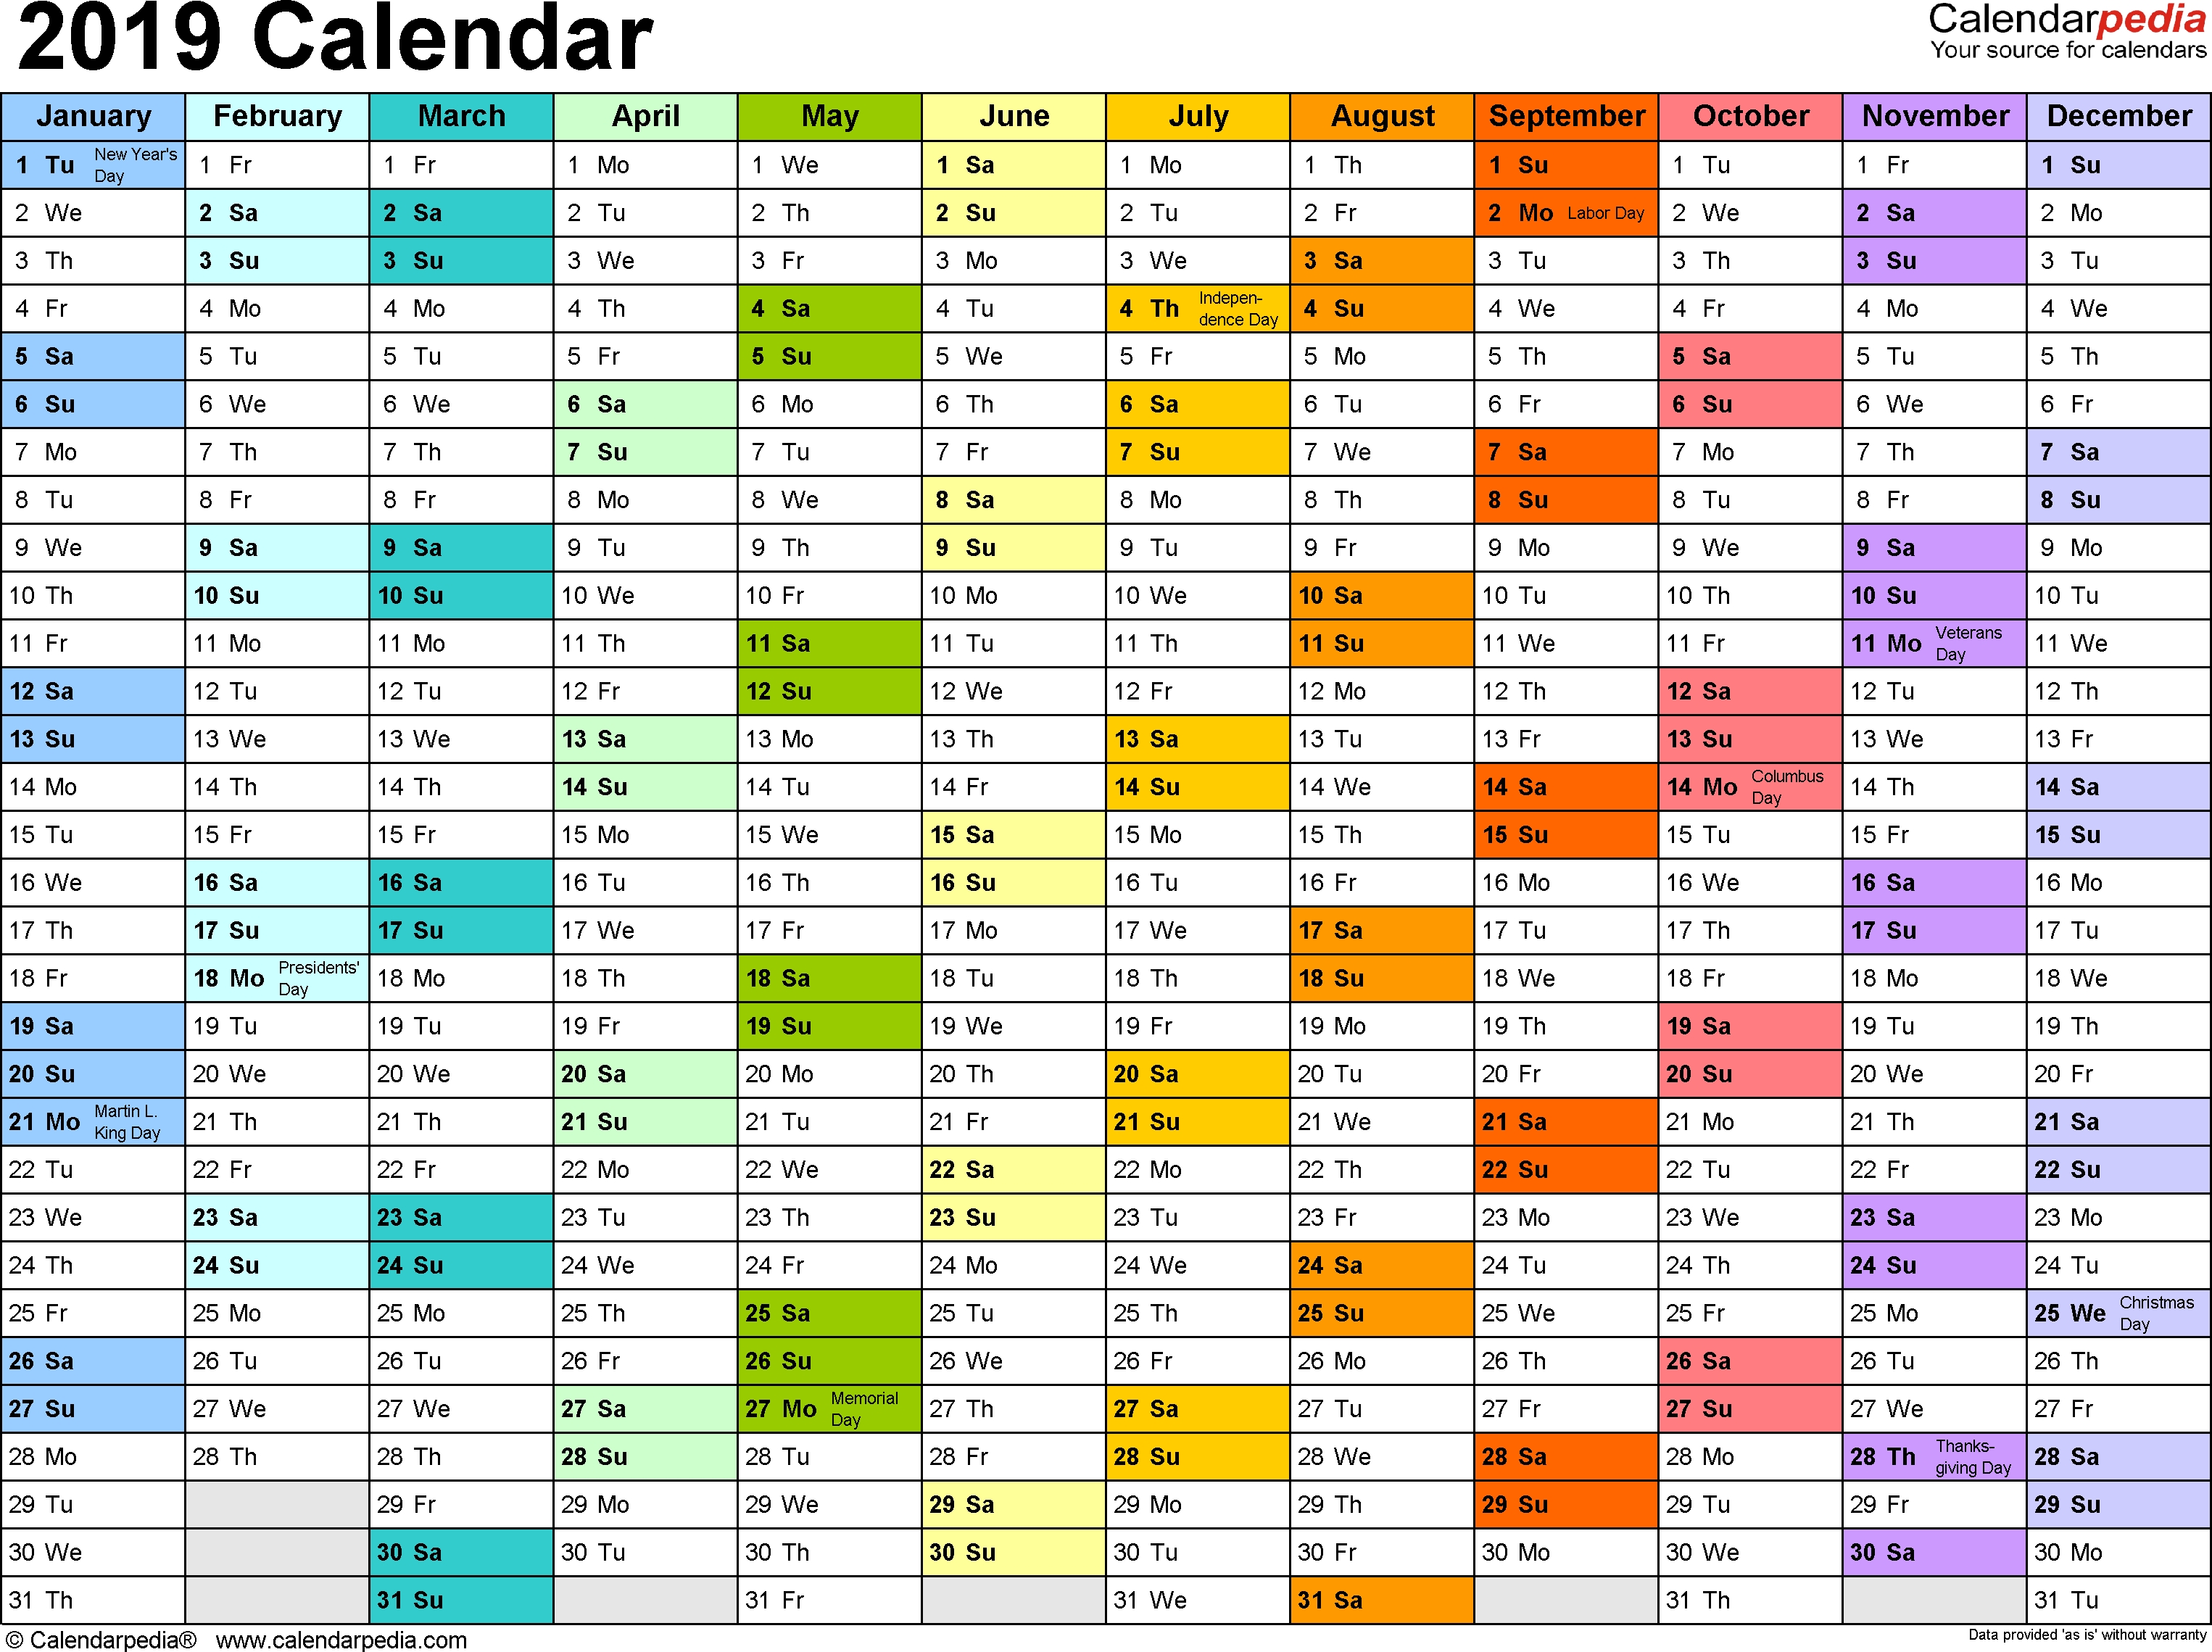 2019 Calendar Pdf - 18 Free Printable Calendar Templates